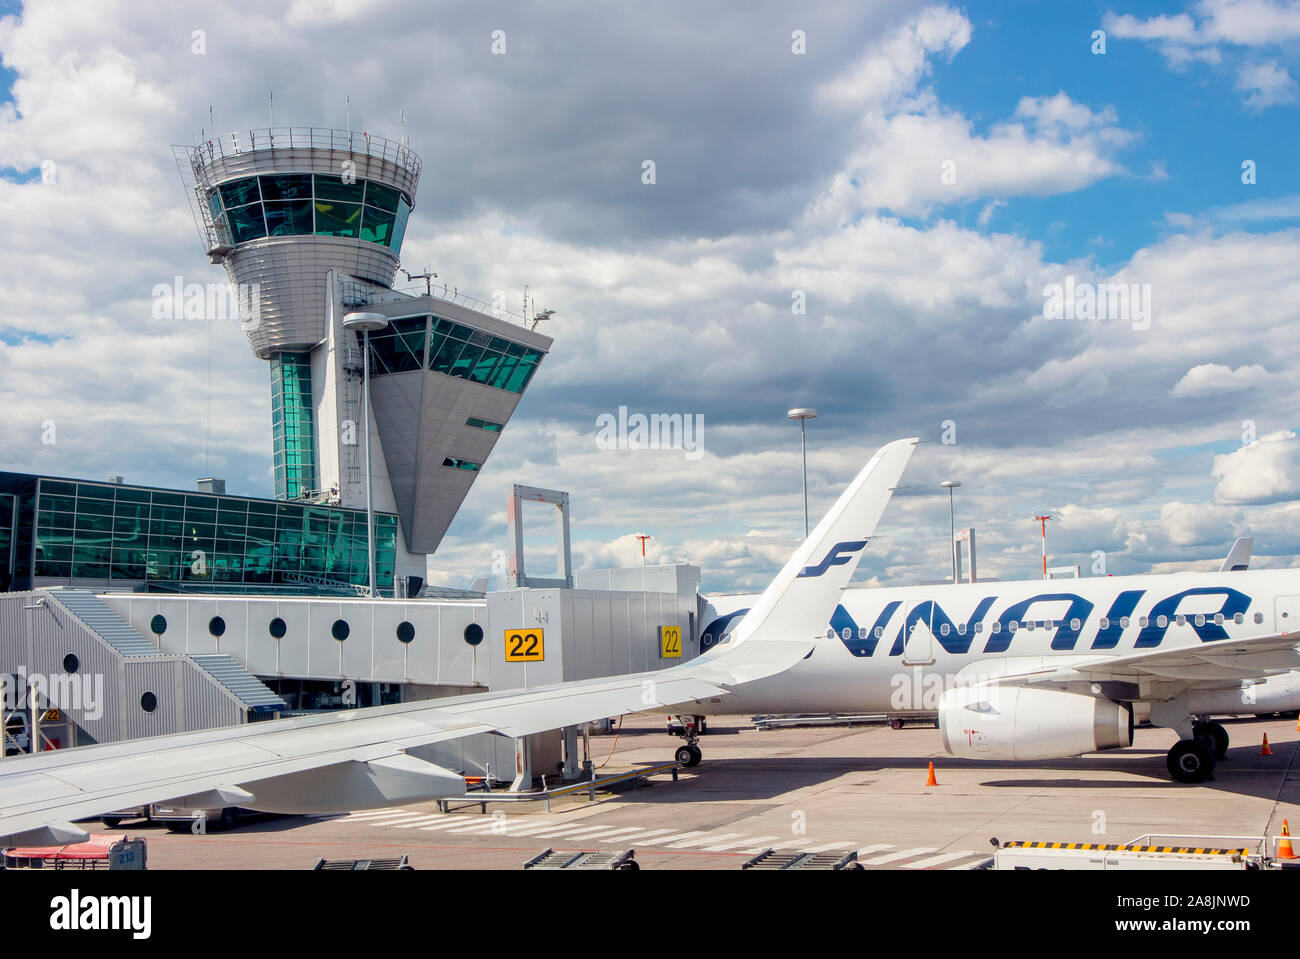 Vantaa, Helsinki/Finland-13JUL2019: Finavia Vantaa airport in Helsinki Finland. Passenger airplane in airport. Stock Photo